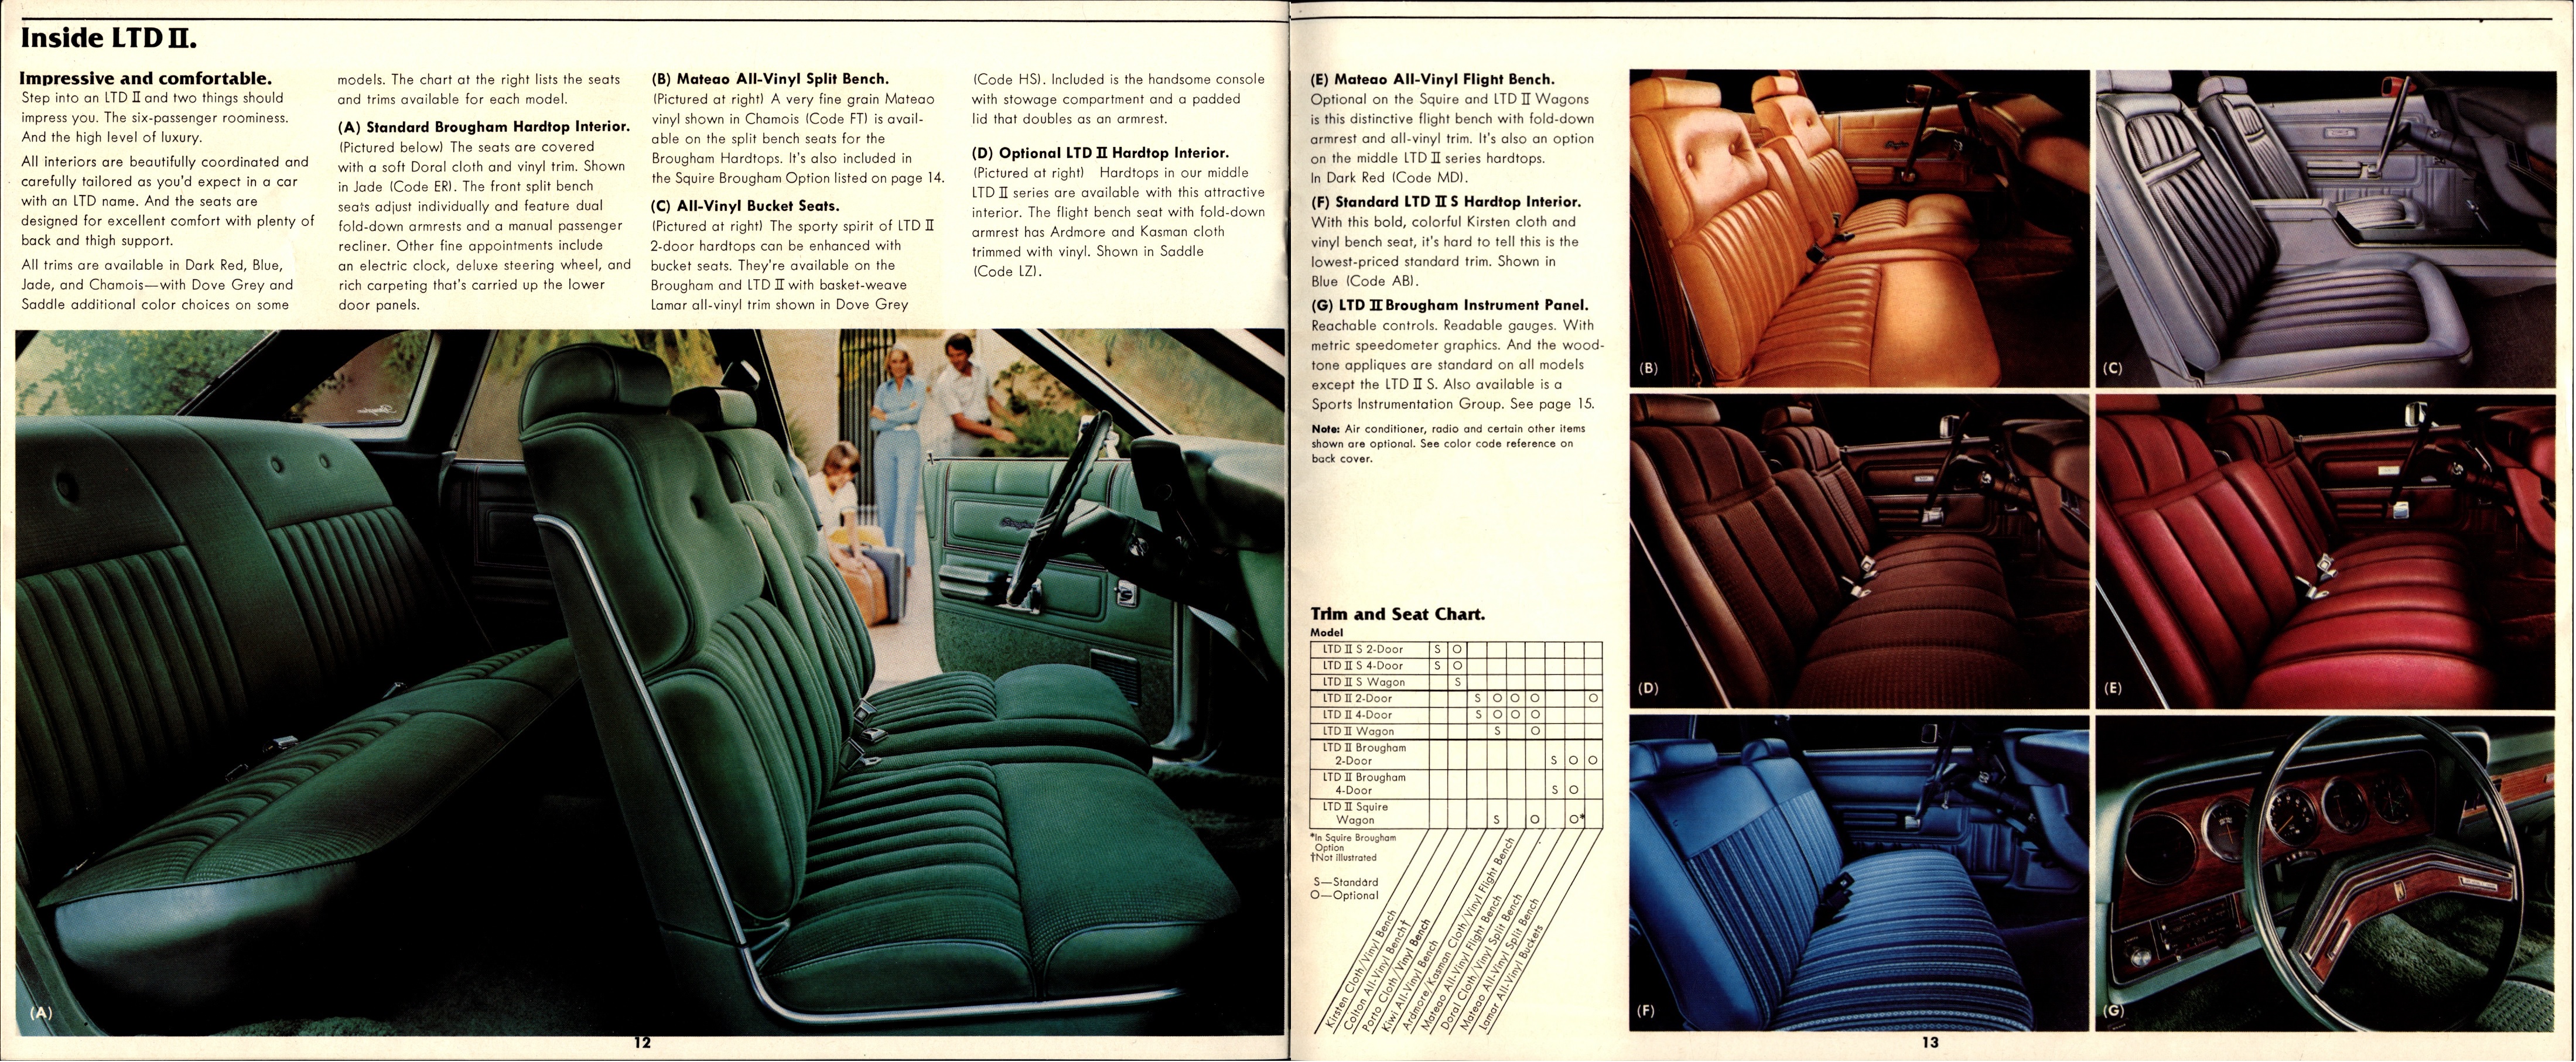 1977 Ford LTD II Brochure (Cdn) 12-13